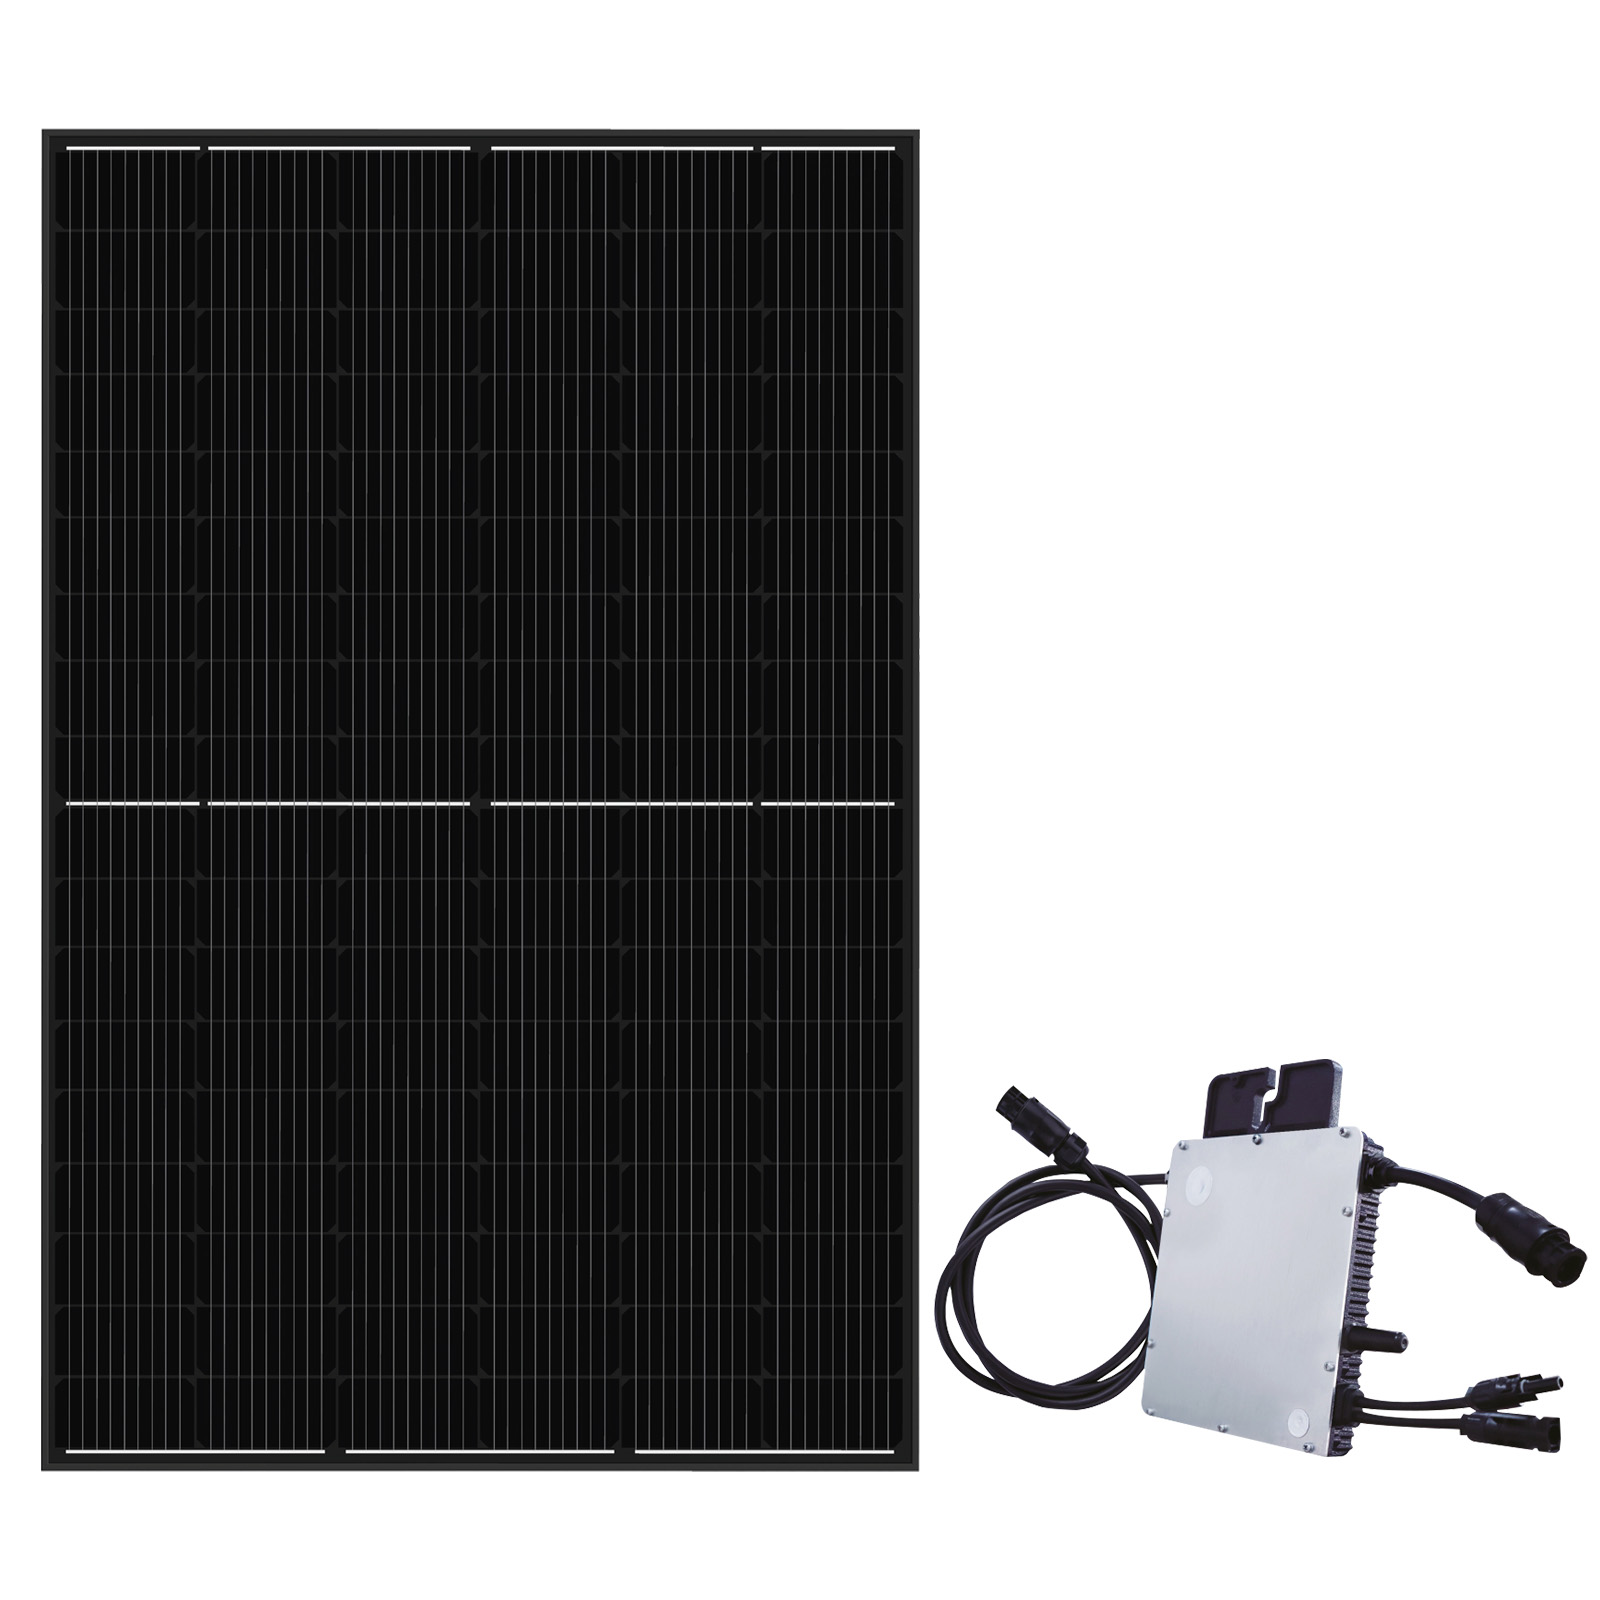 Solar PV 380 W Balkonkraftwerke Komplettset – Solar Anlage mit Jinergy Module